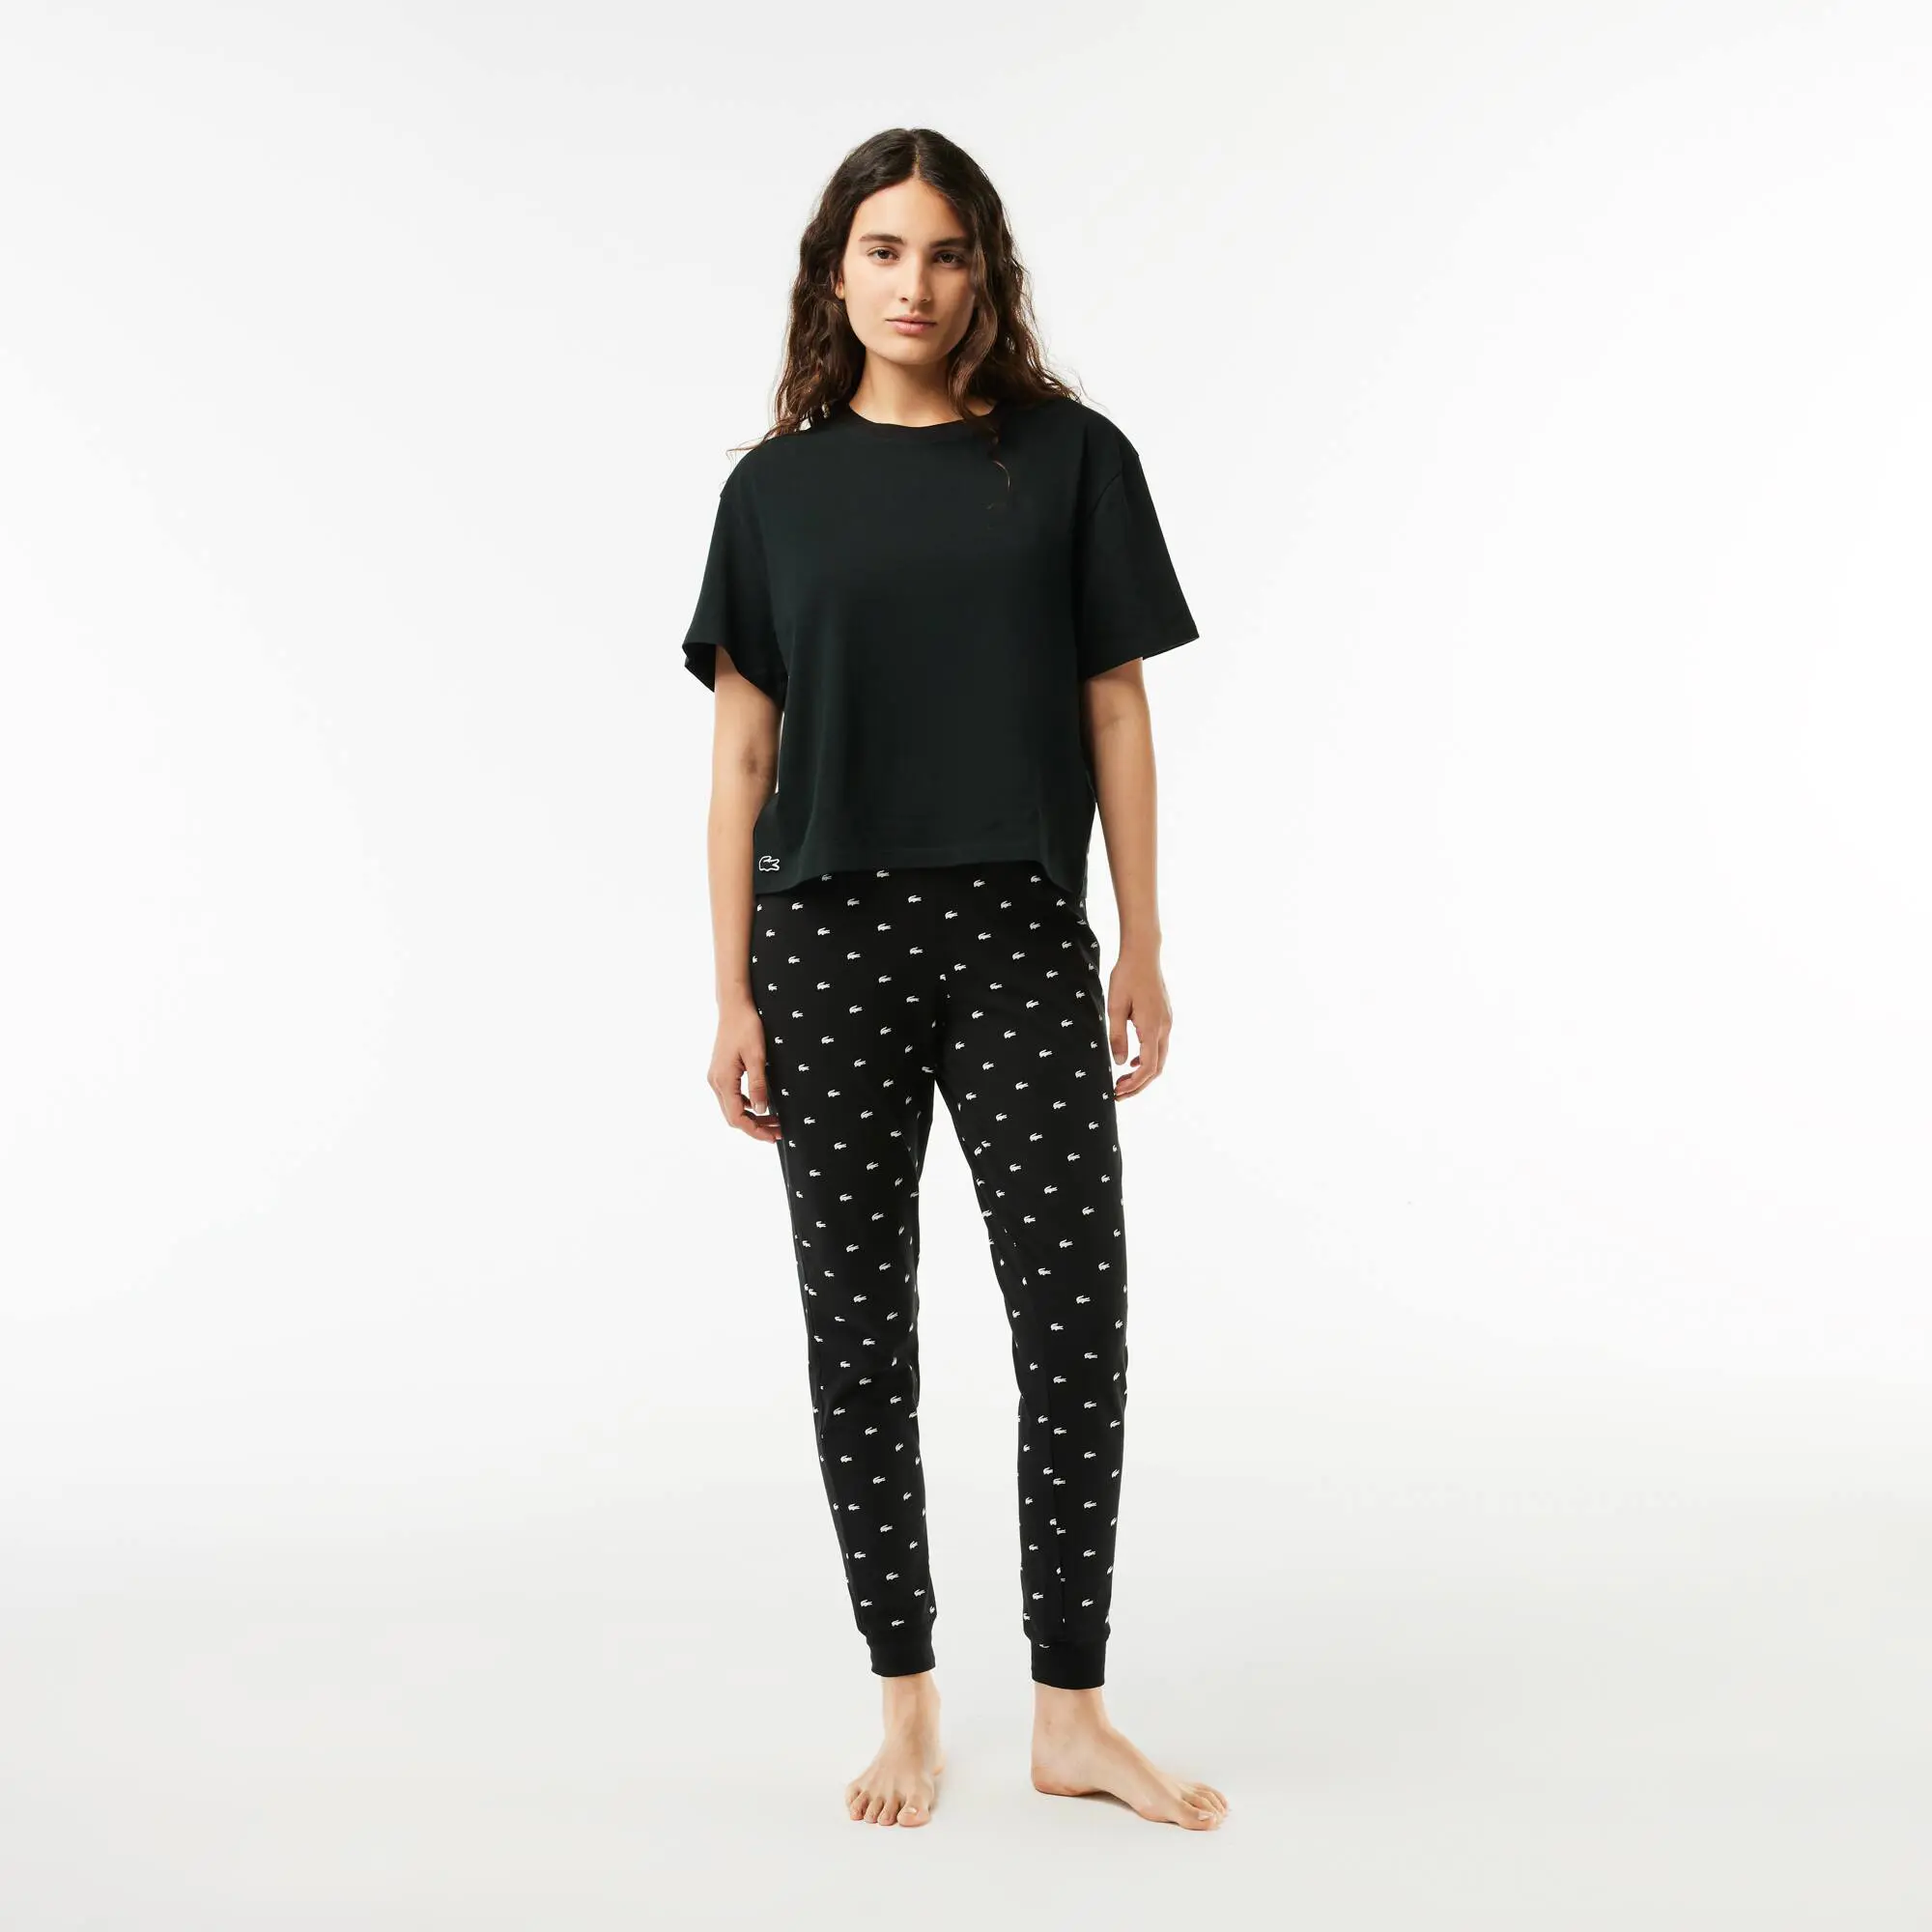 Lacoste Pyjamas Set with Croc Pants. 1